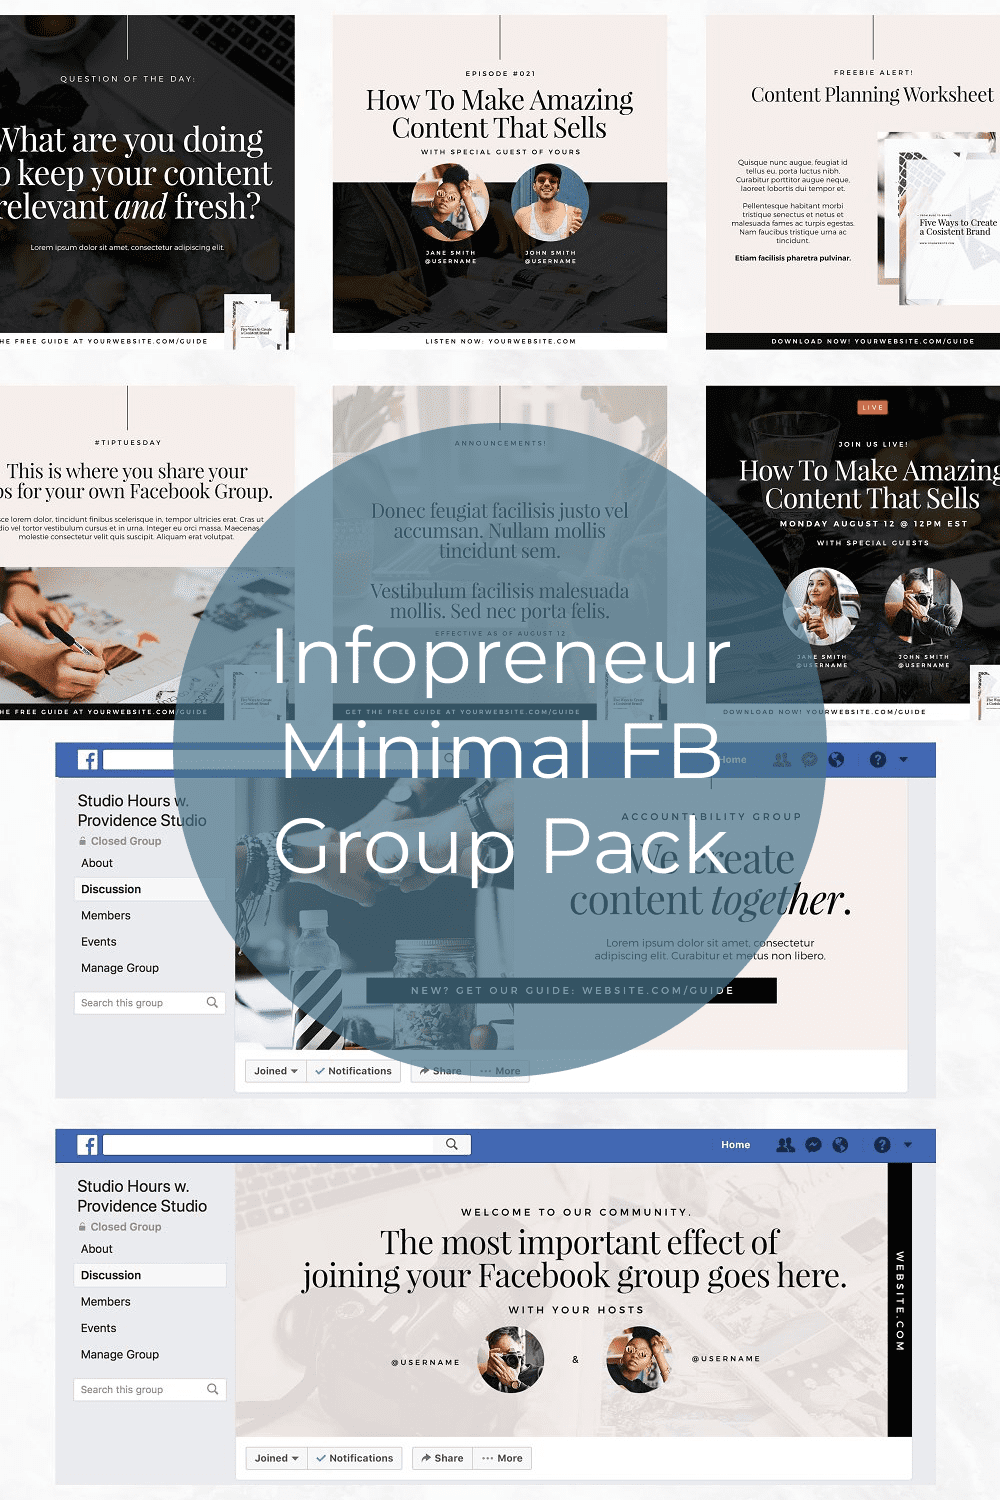 Infopreneur Minimal FB Group Pack - Pinterest.